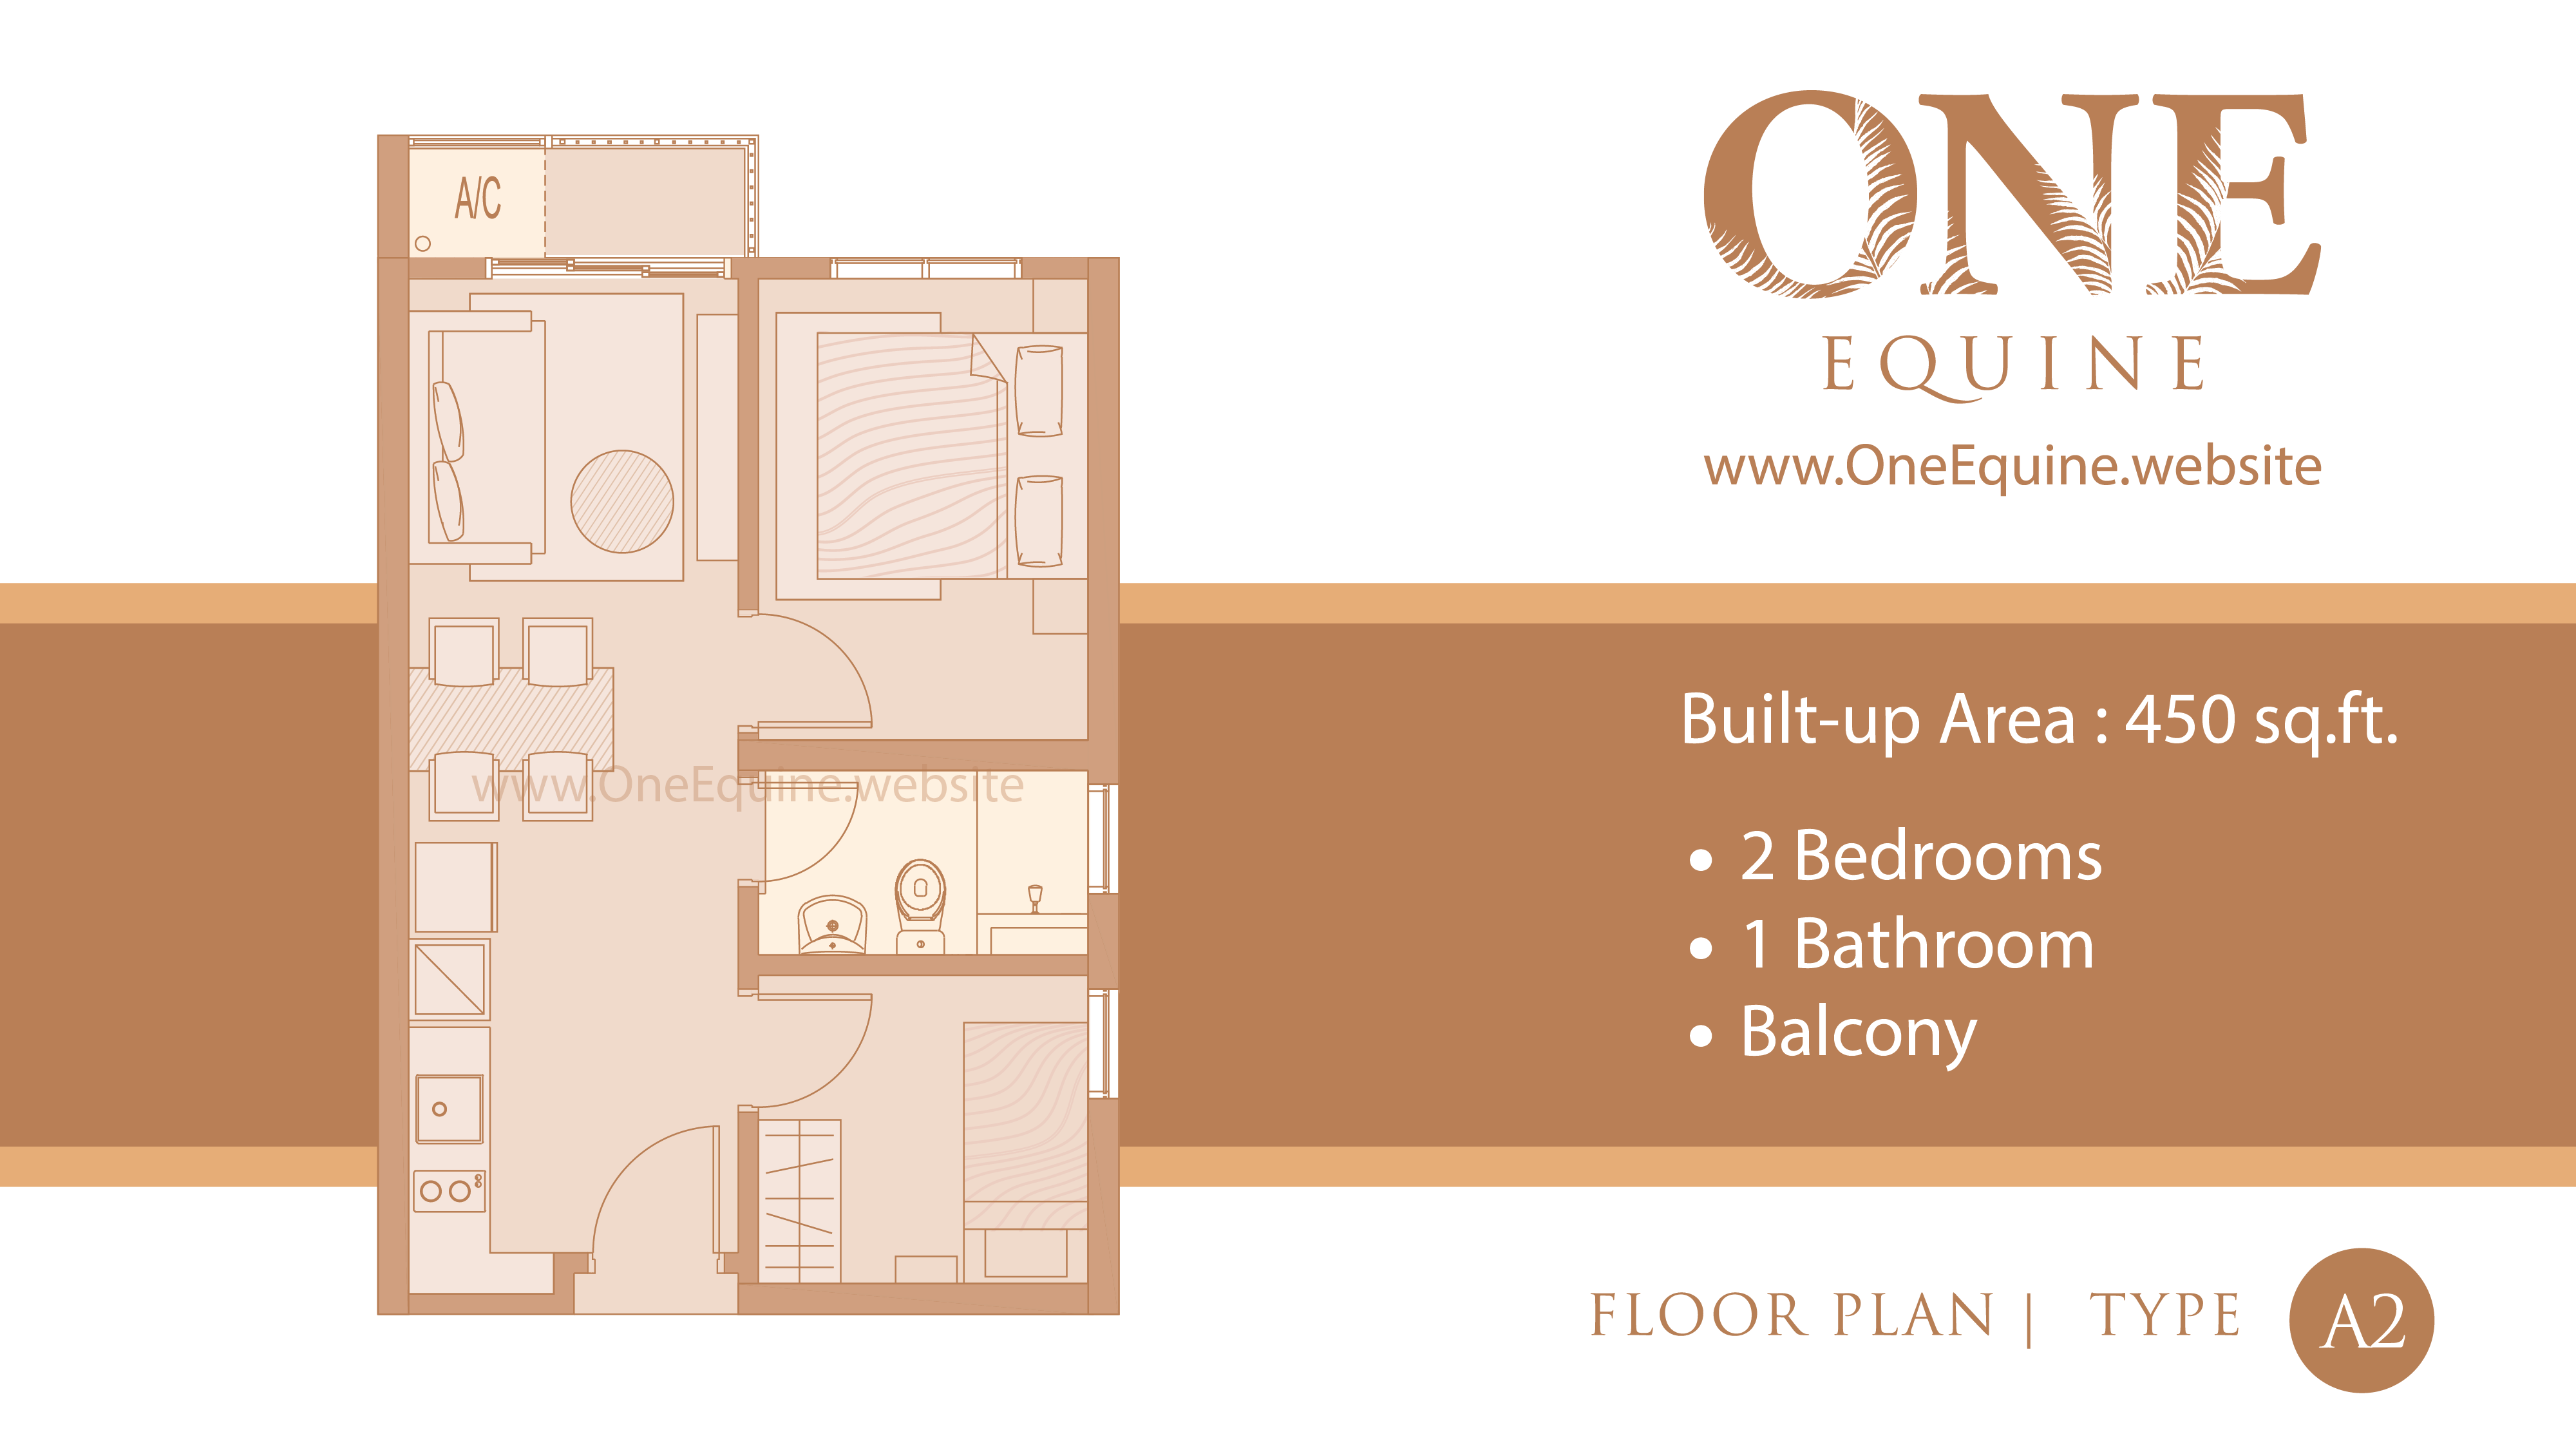 One Equine Park Seri Kembangan - SOHO 2 Bedrooms 1 Bathroom Balcony - Floor Plan Type A2 - 450 sqft